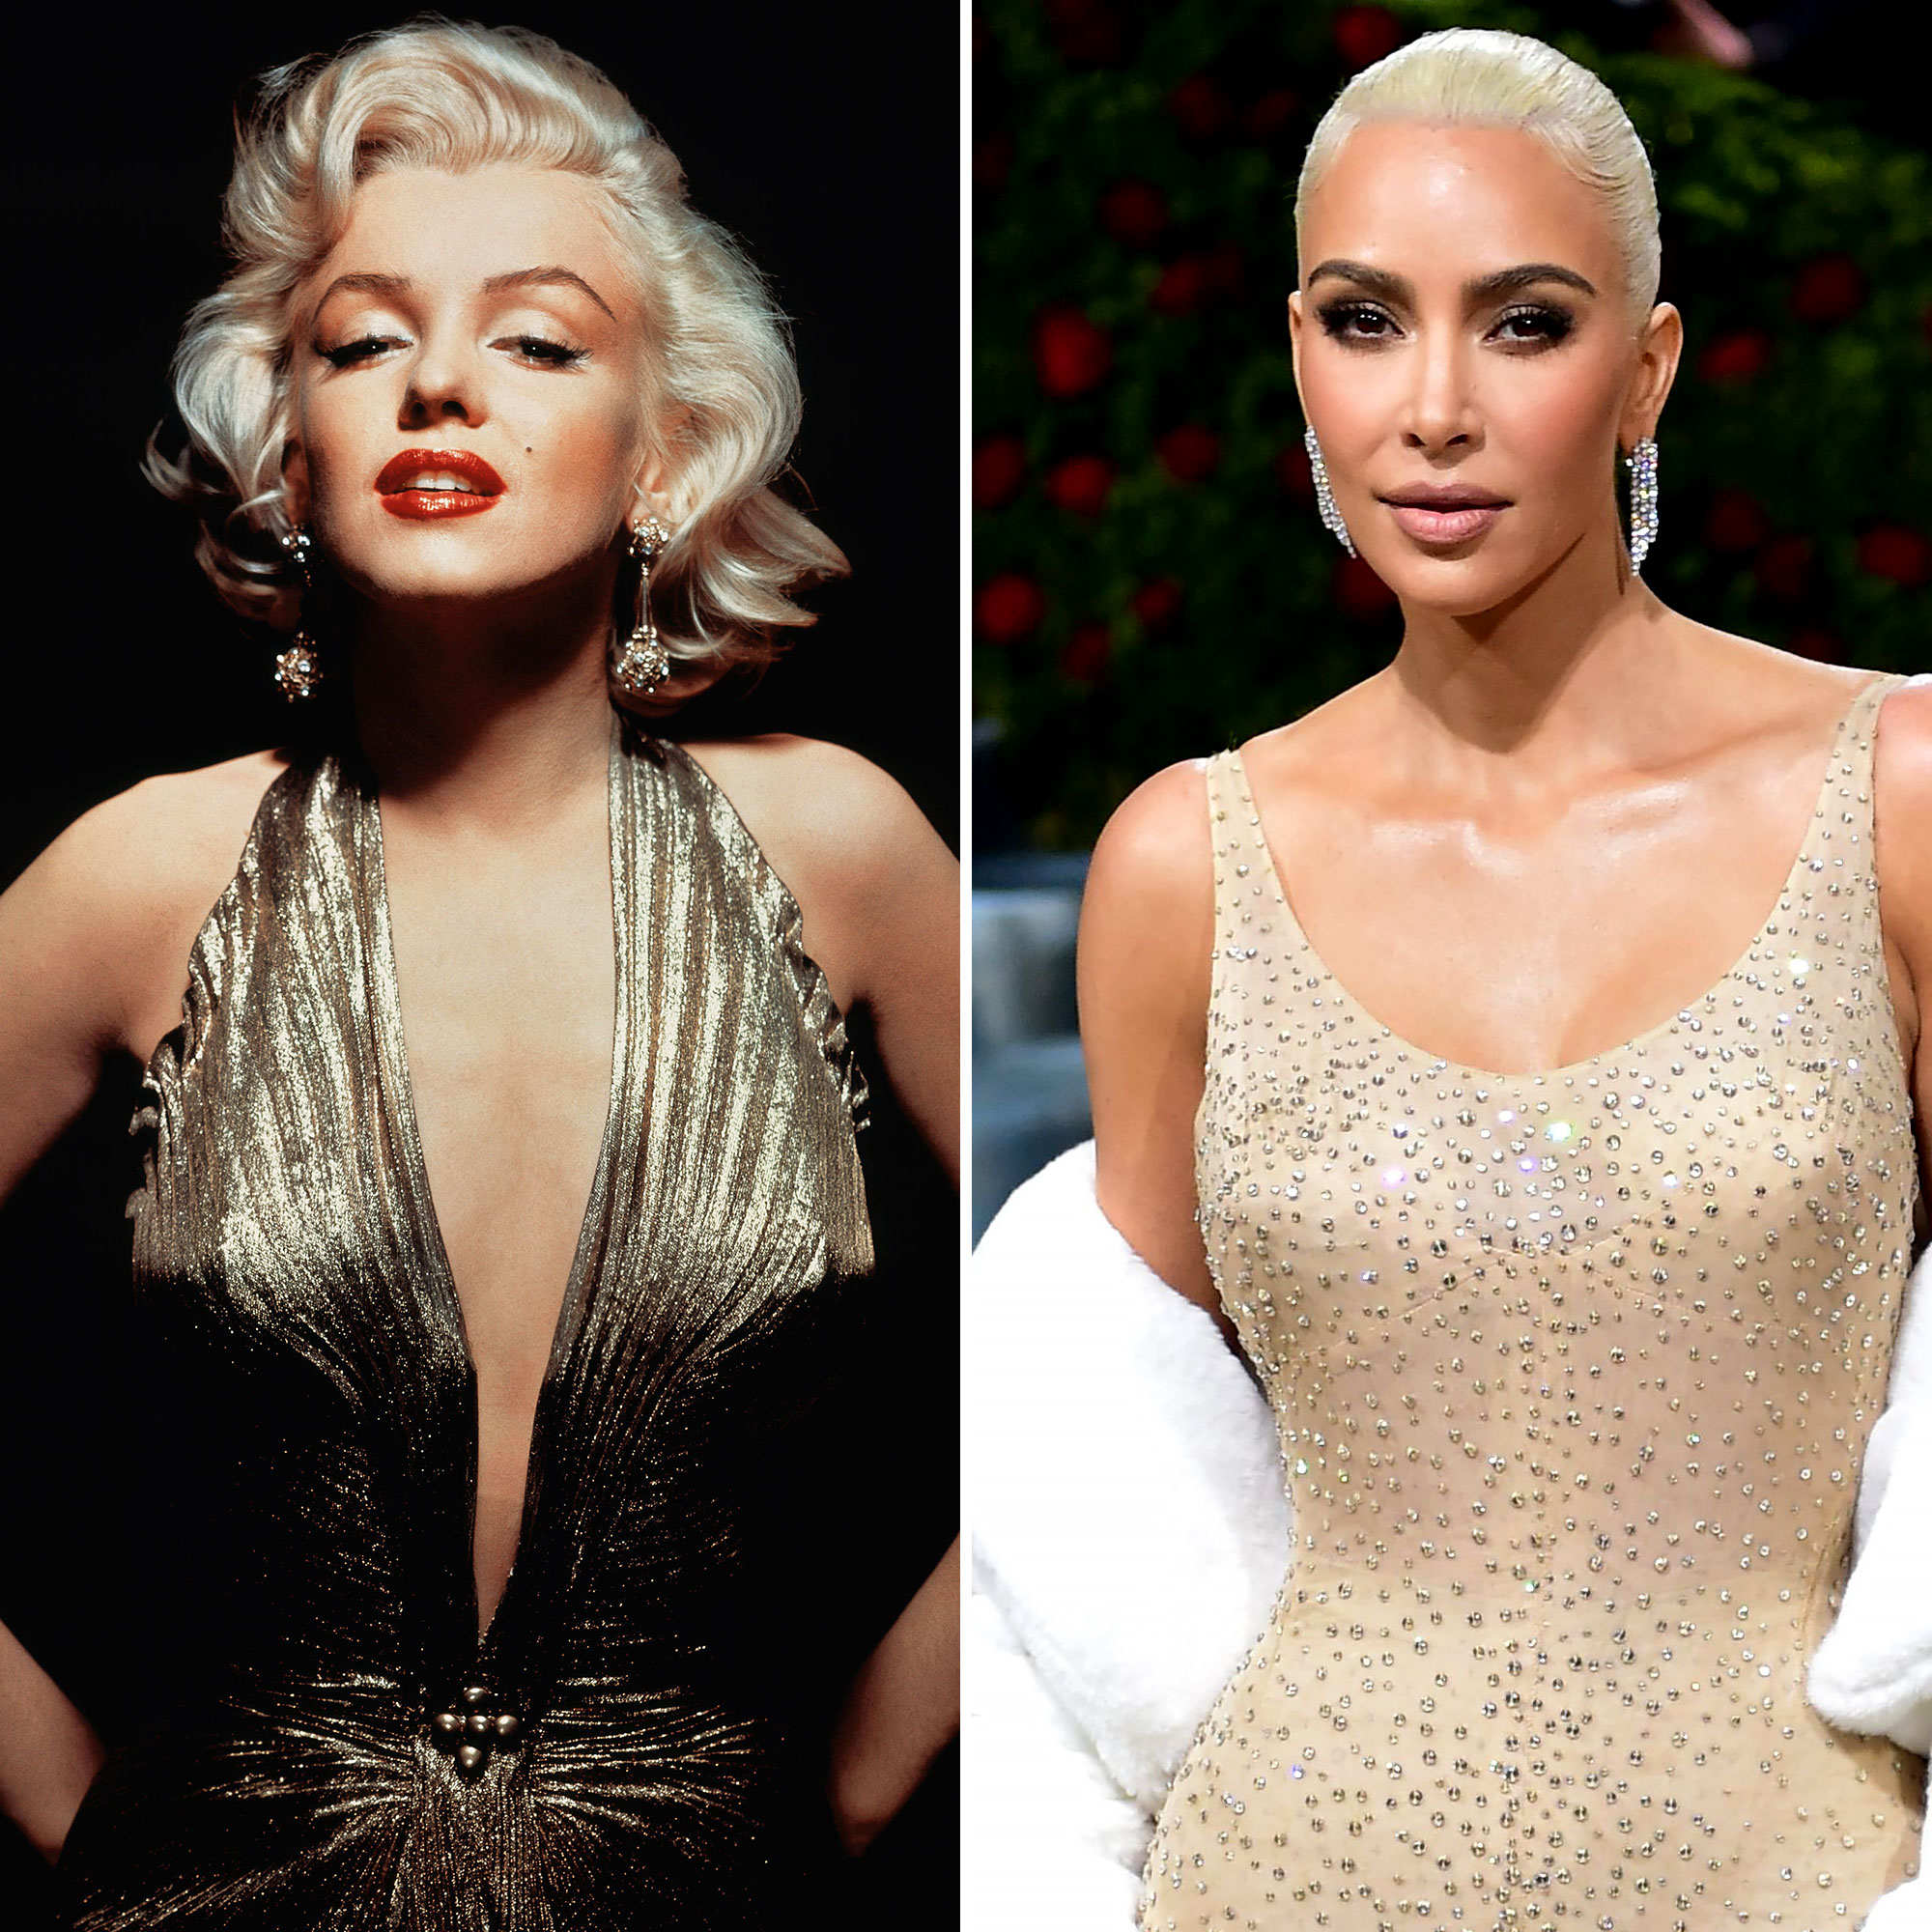 Bob Mackie calls Kim Kardashian in Marilyn Monroe dress a mistake